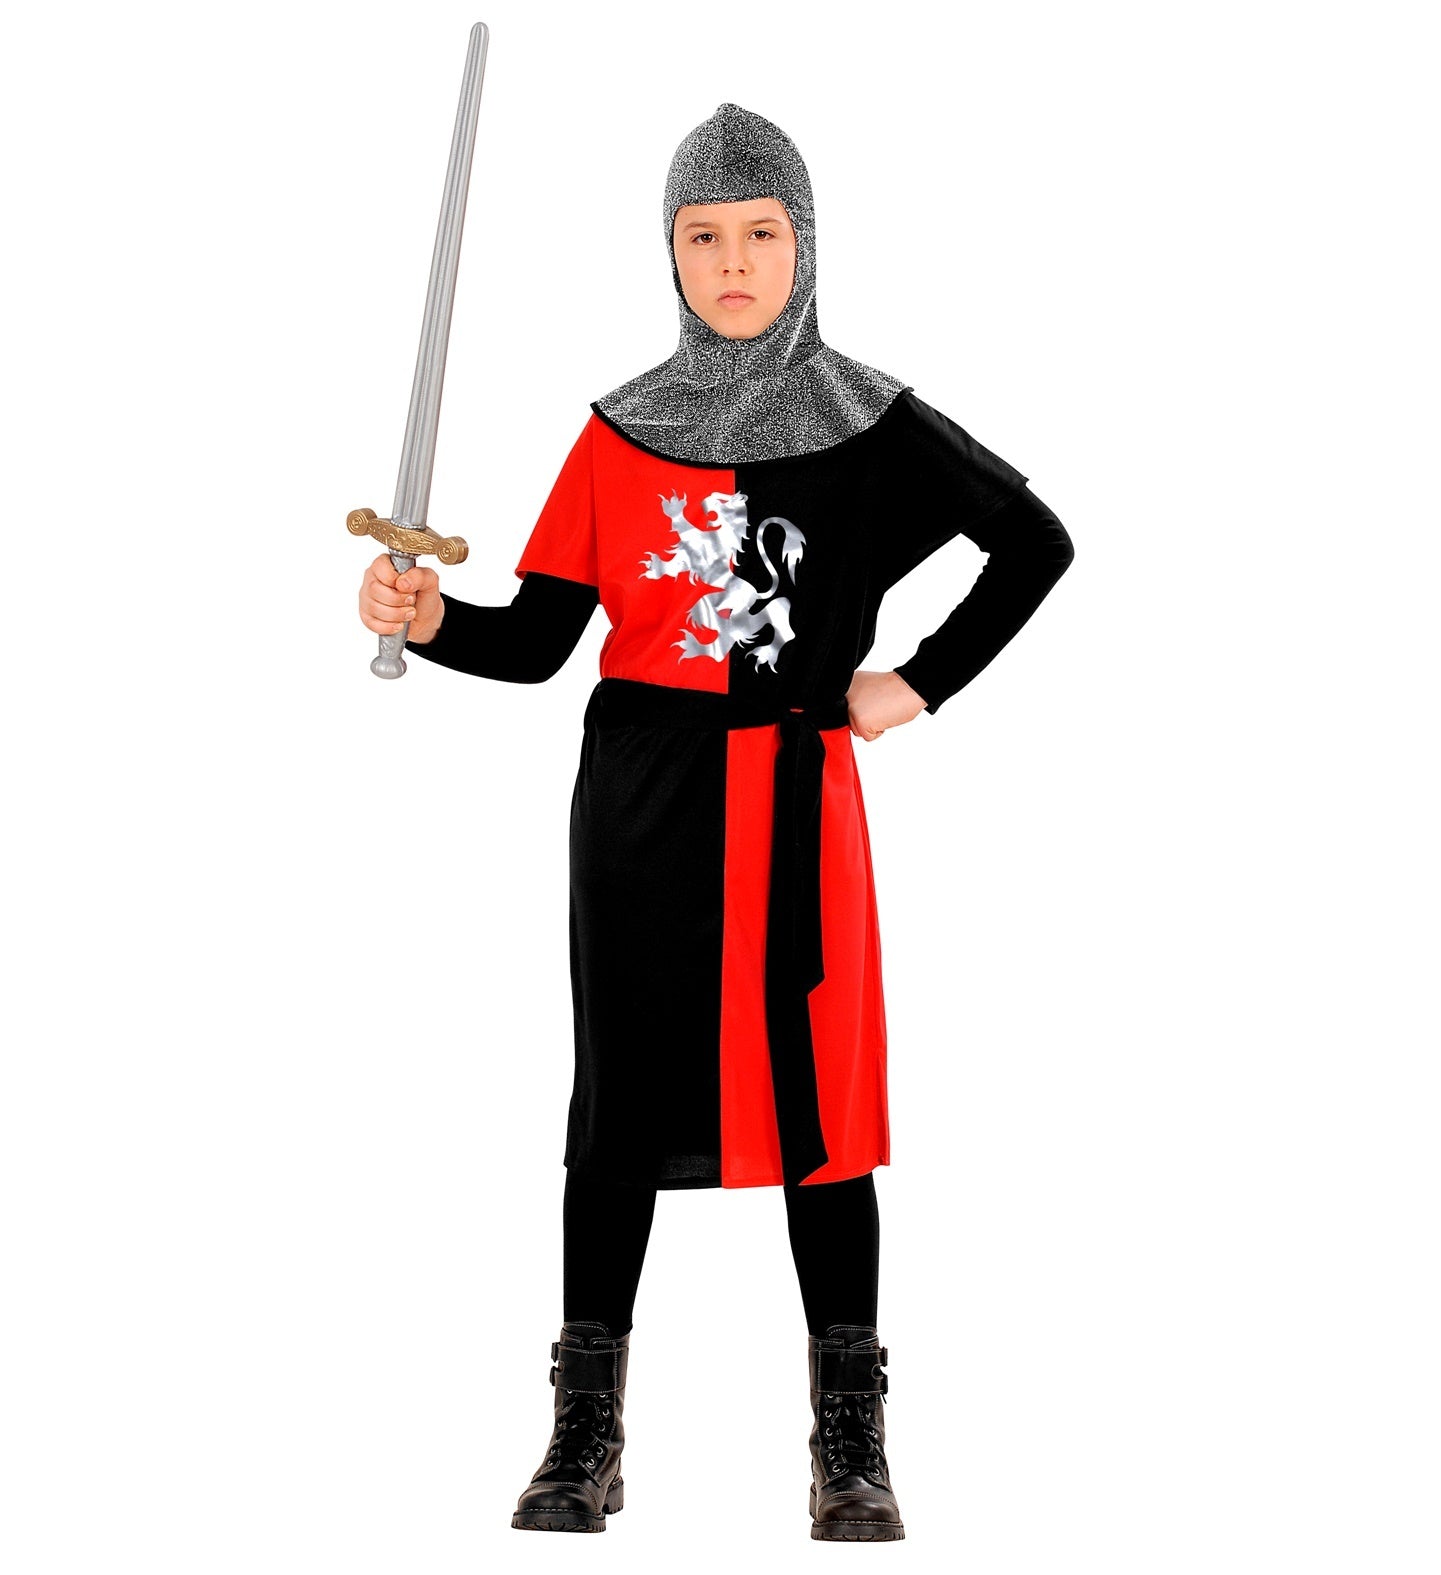 Widmann - Middeleeuwse & Renaissance Strijders Kostuum - Middeleeuwse Jongste Strijder - Jongen - rood,zwart - Maat 128 - Carnavalskleding - Verkleedkleding